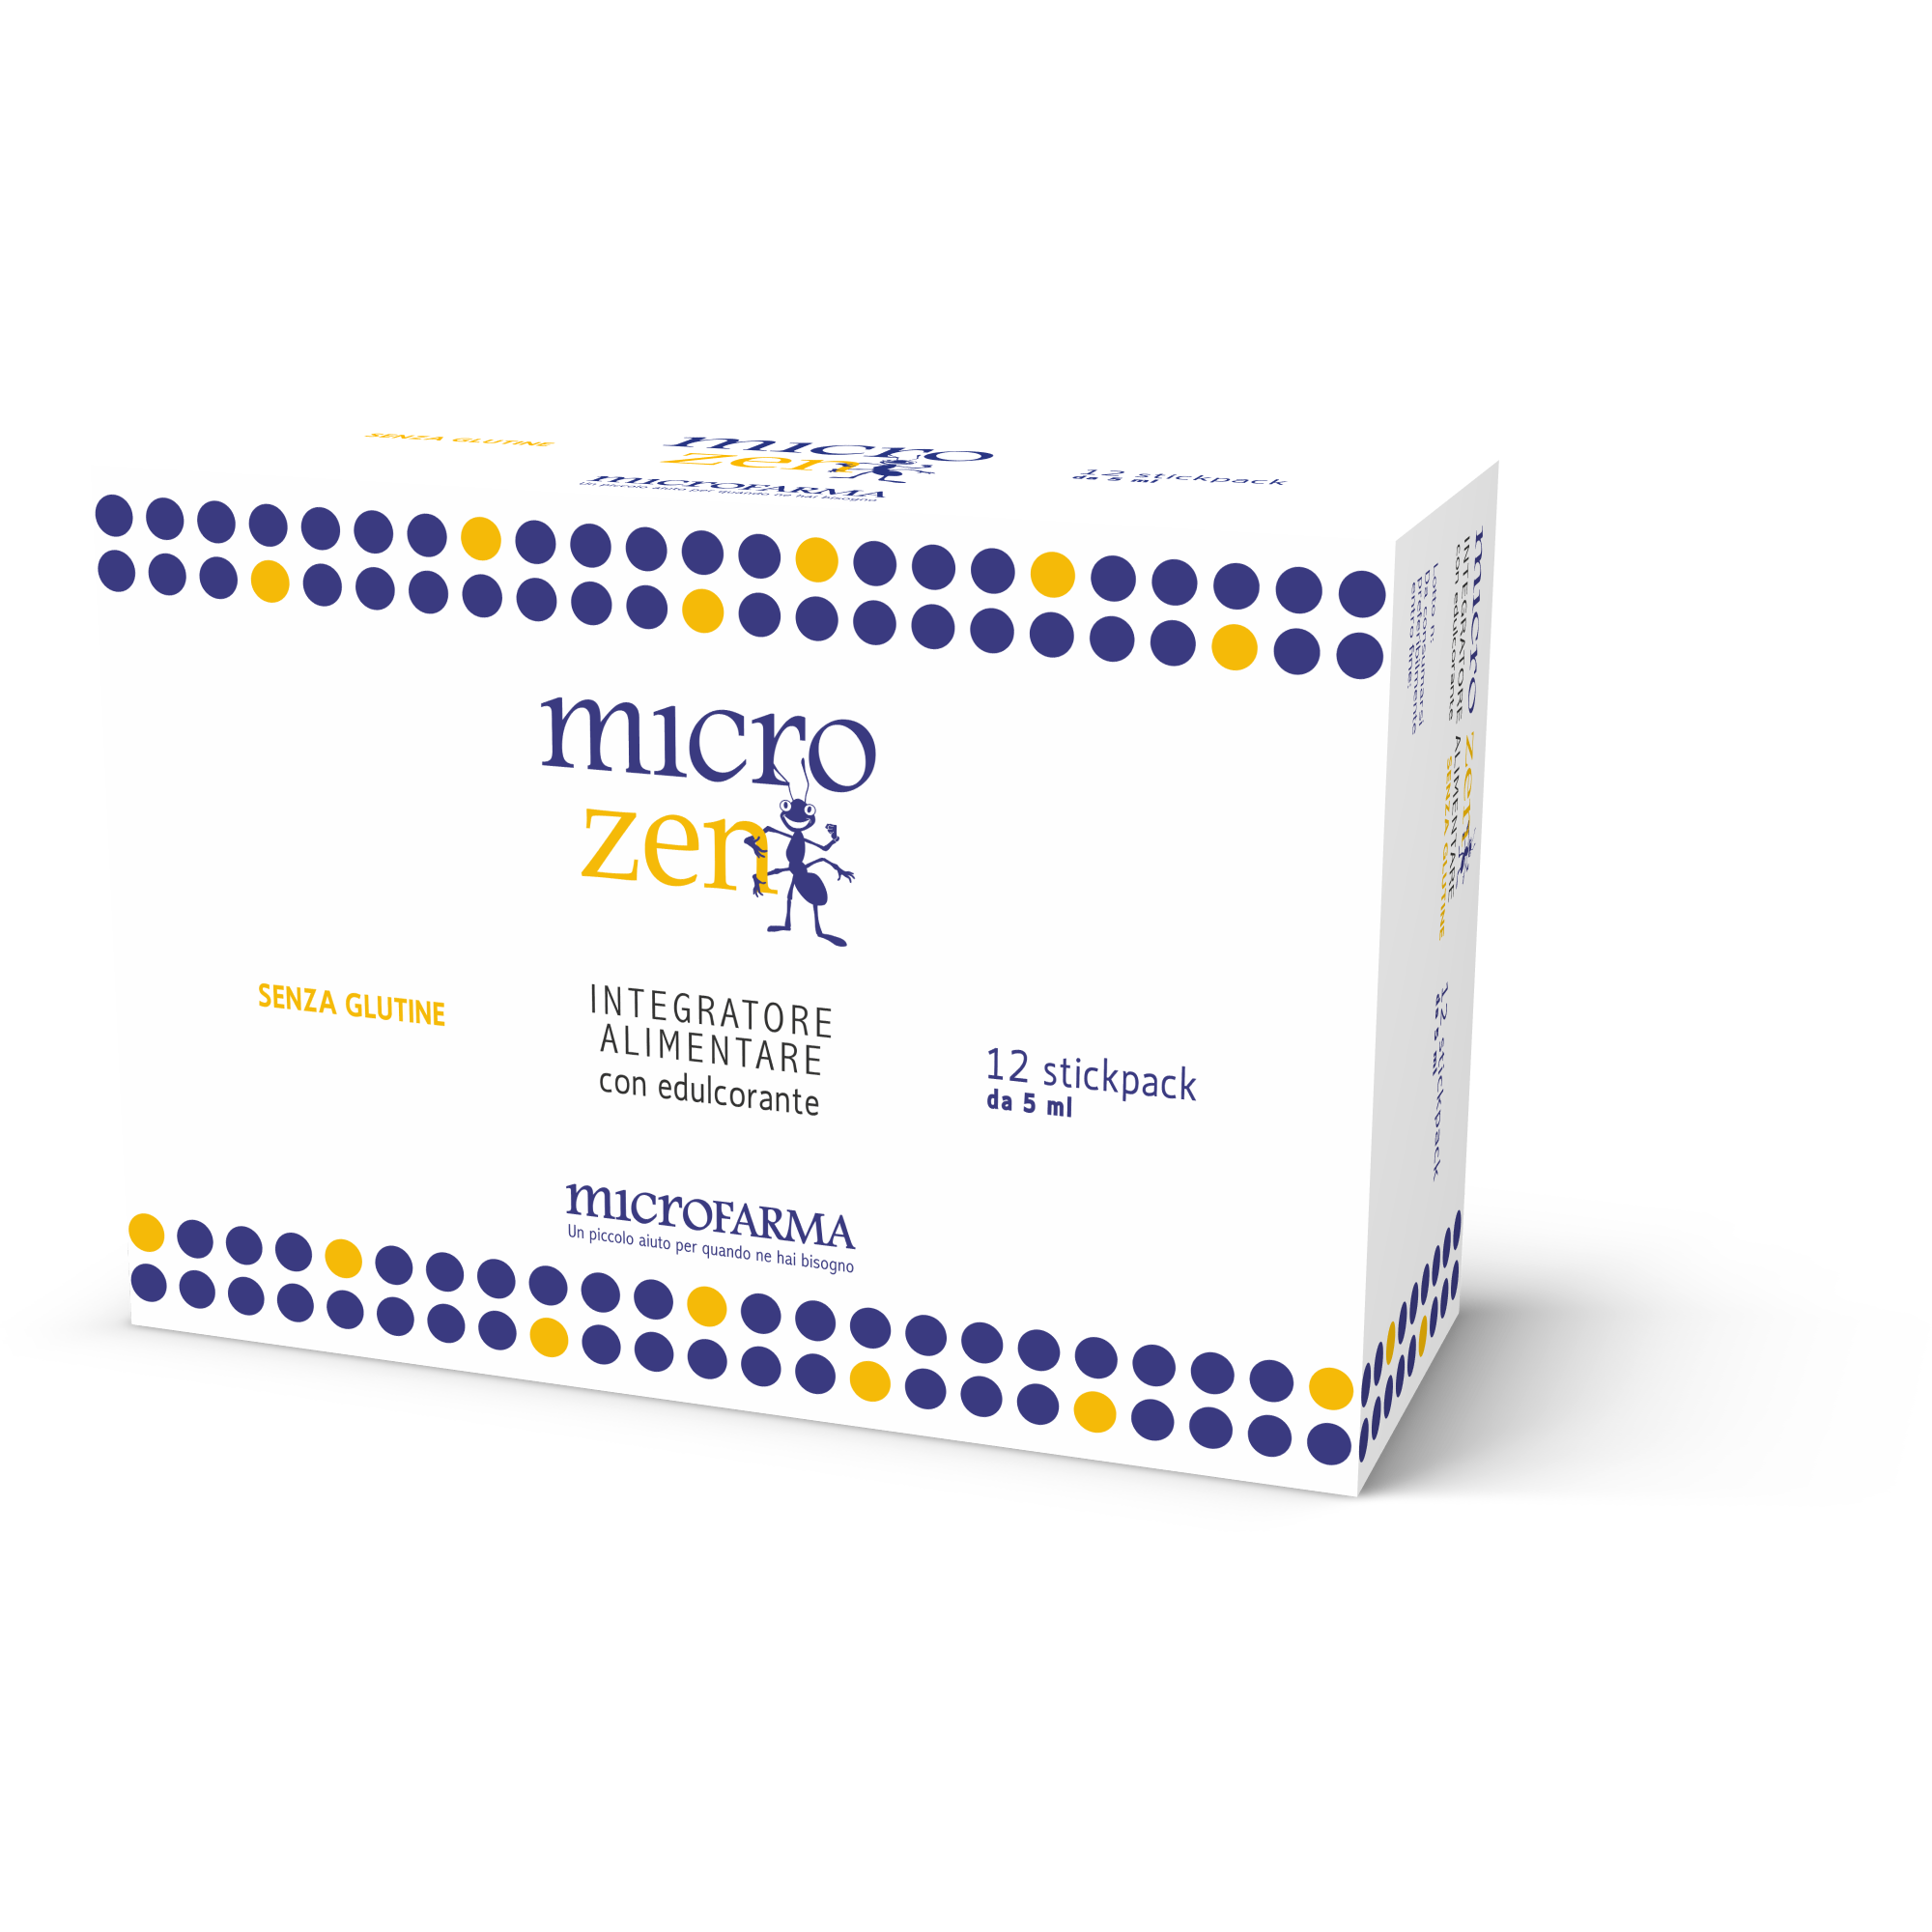 Micro Zen